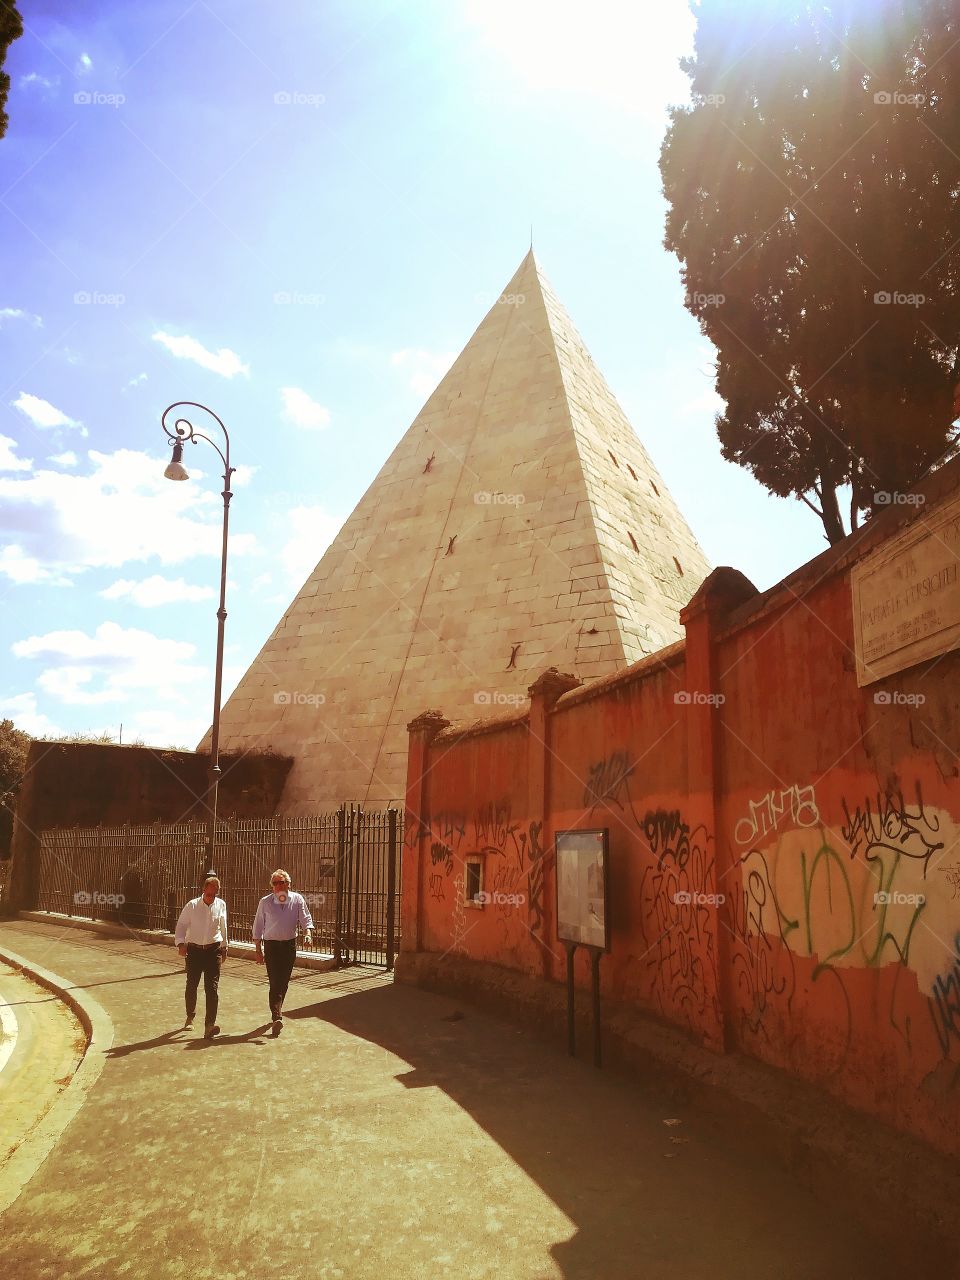 Pyramid in Rome